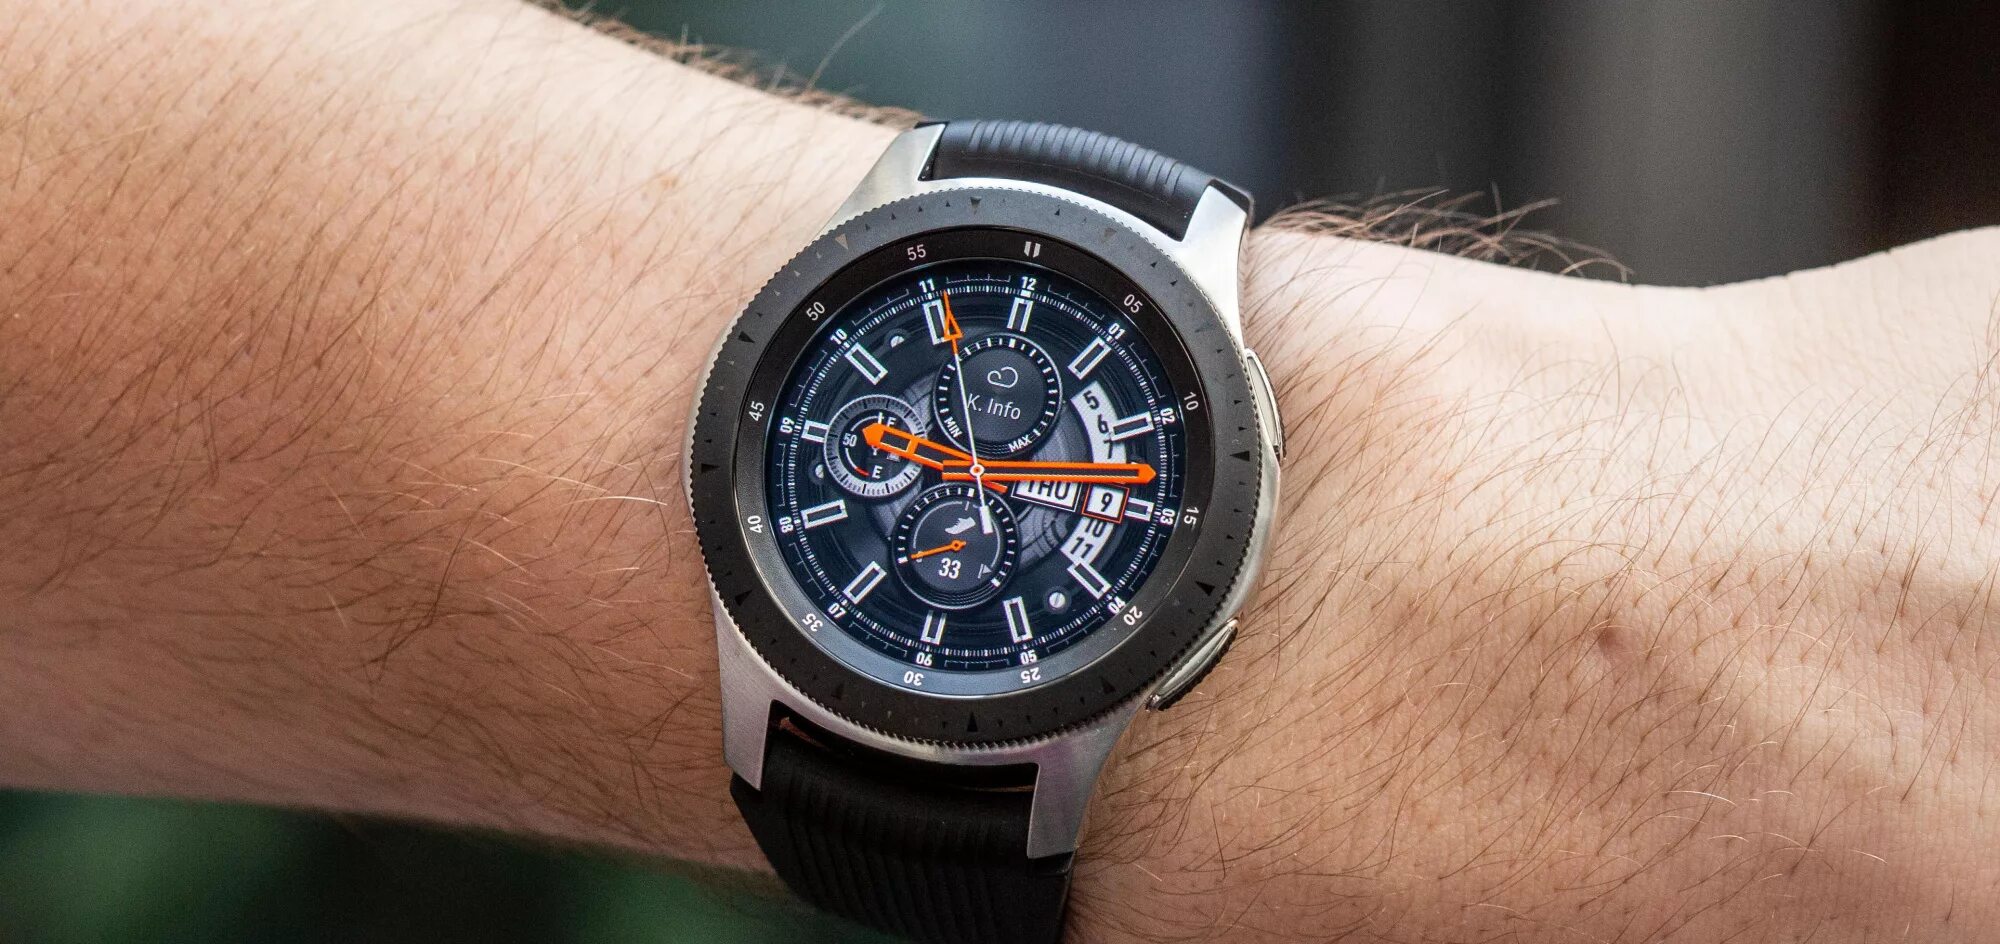 Samsung часы 46. Samsung Galaxy watch 46mm. Часы самсунг Galaxy watch 46mm. Samsung Galaxy watch 46mm Silver. Galaxy watch 46mm SM-r800.